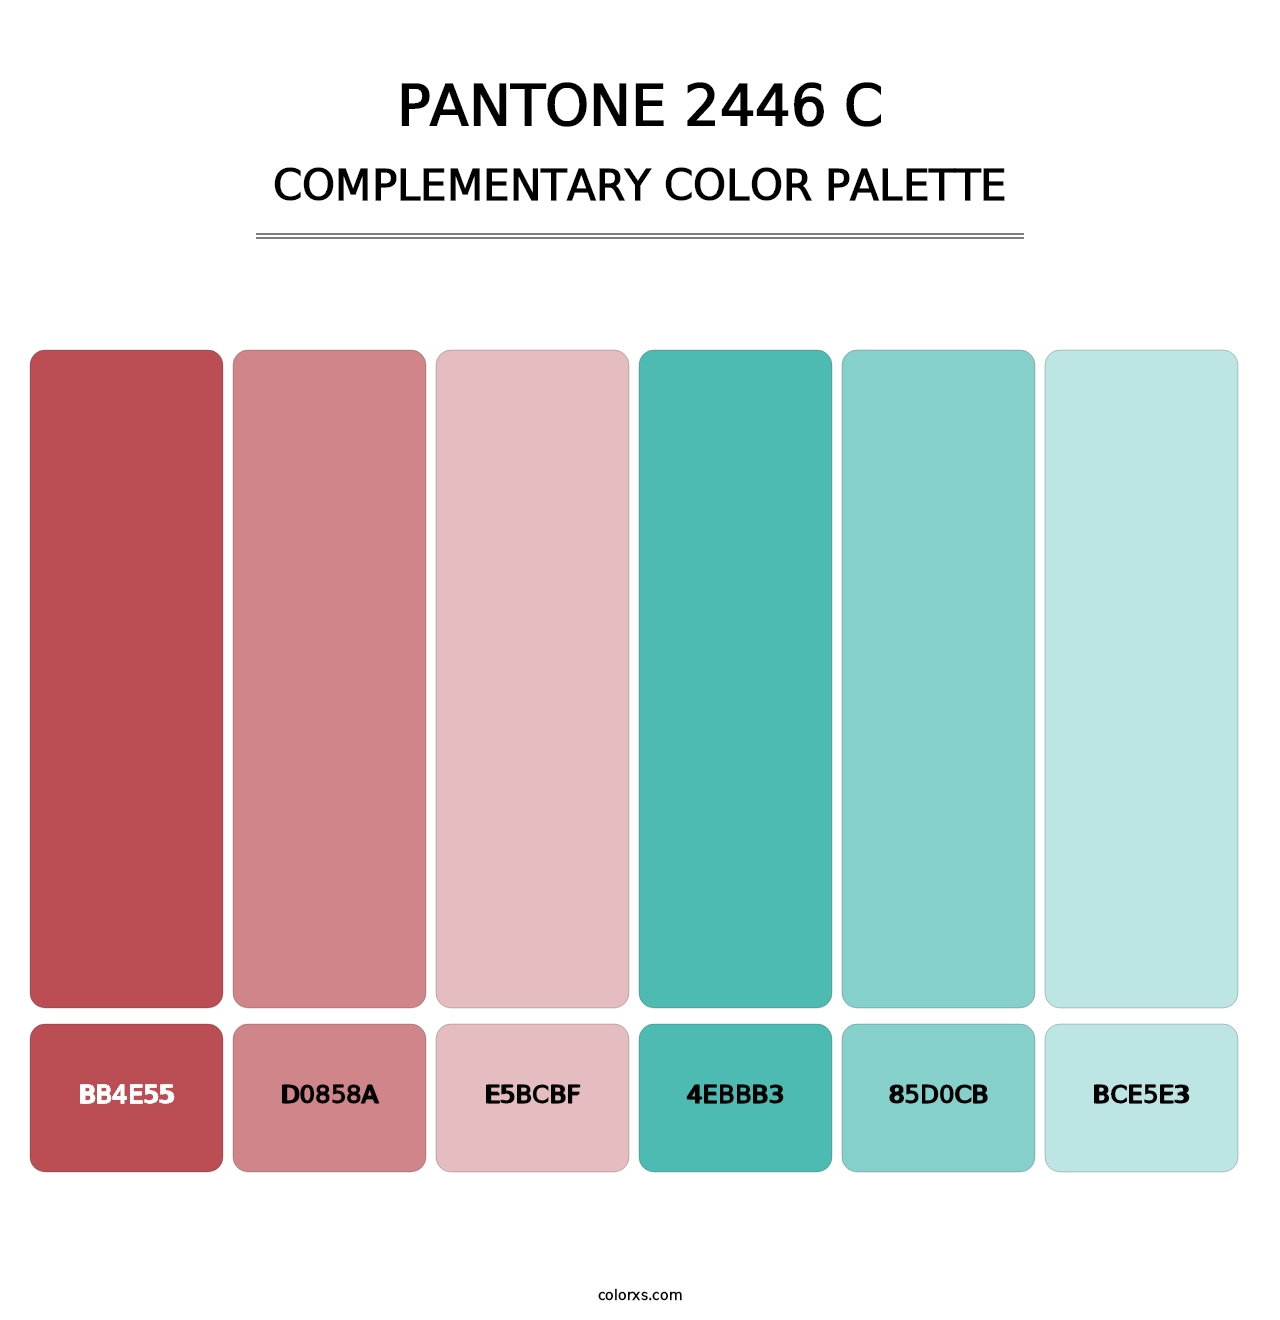 PANTONE 2446 C - Complementary Color Palette